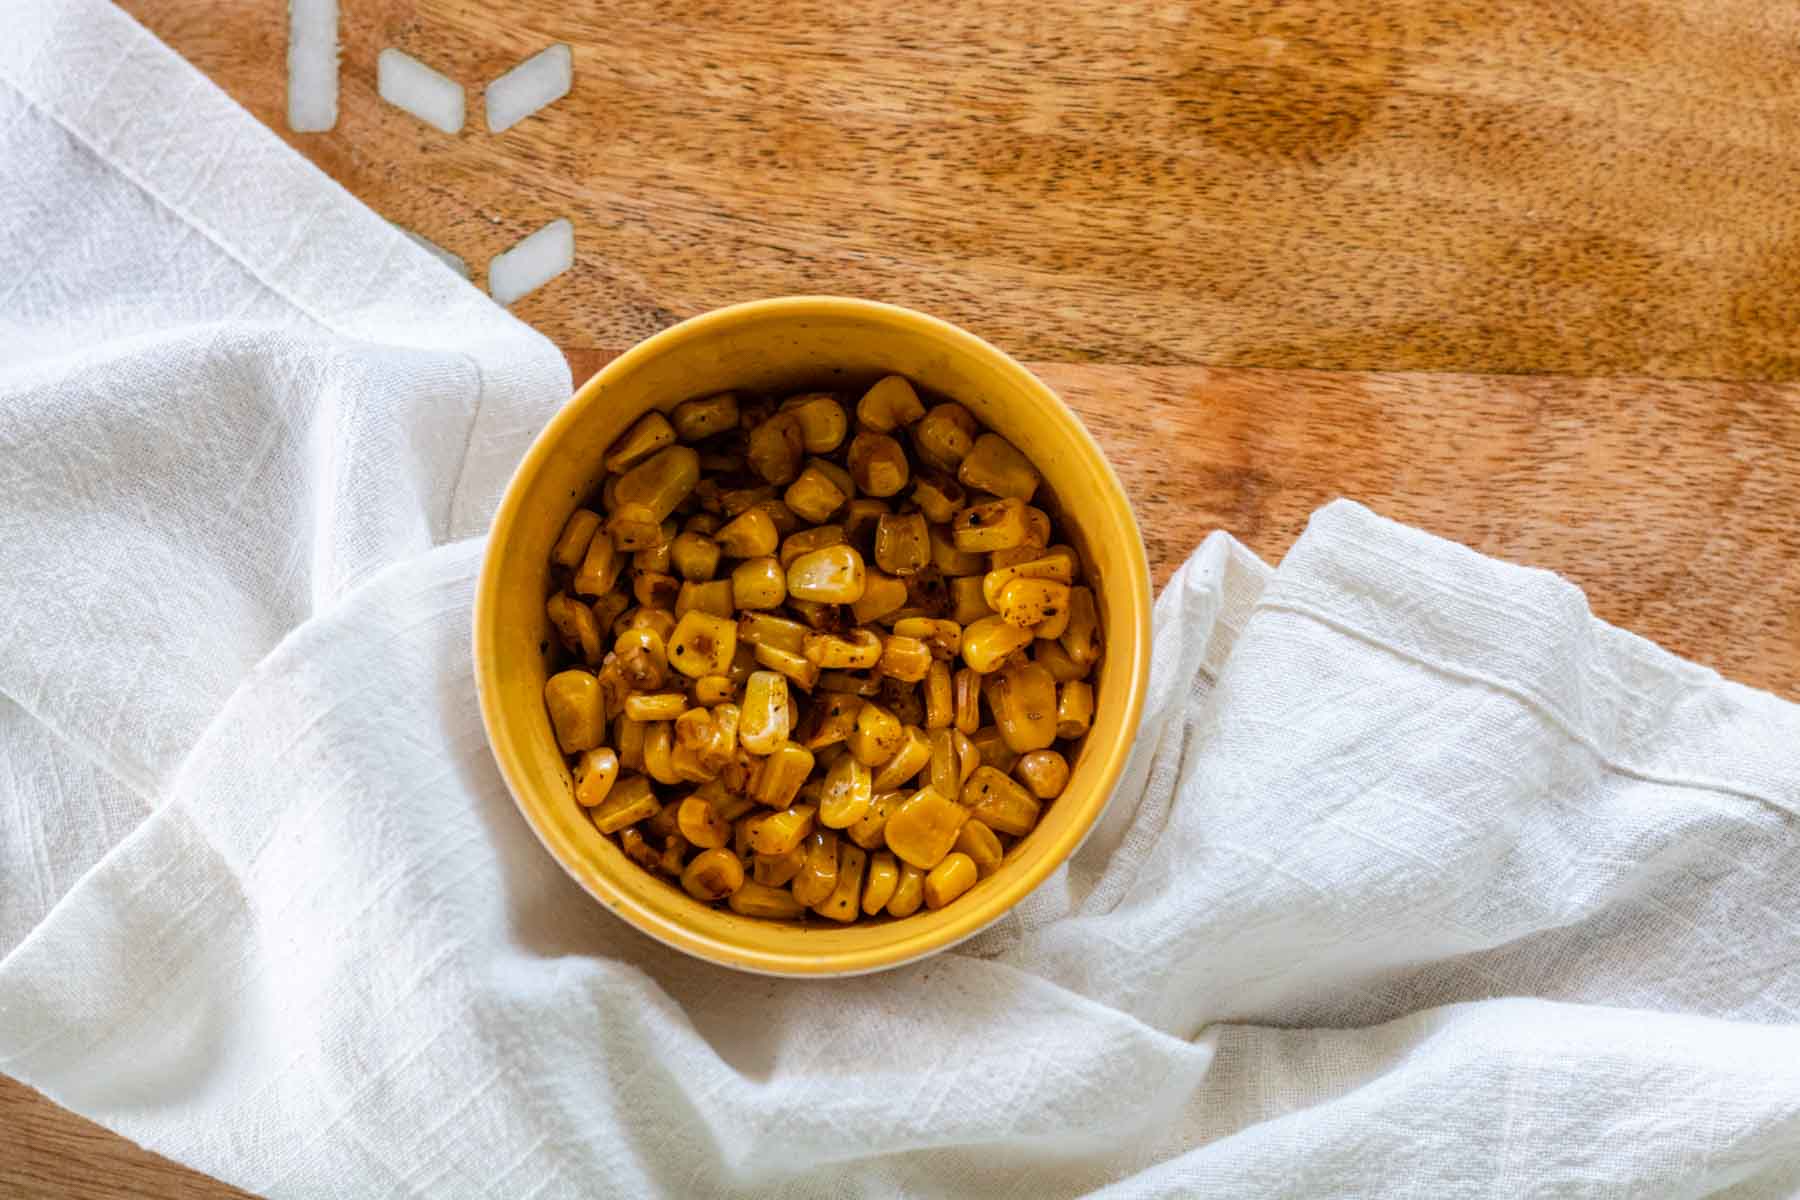 Charred corn in a yellow bowl.